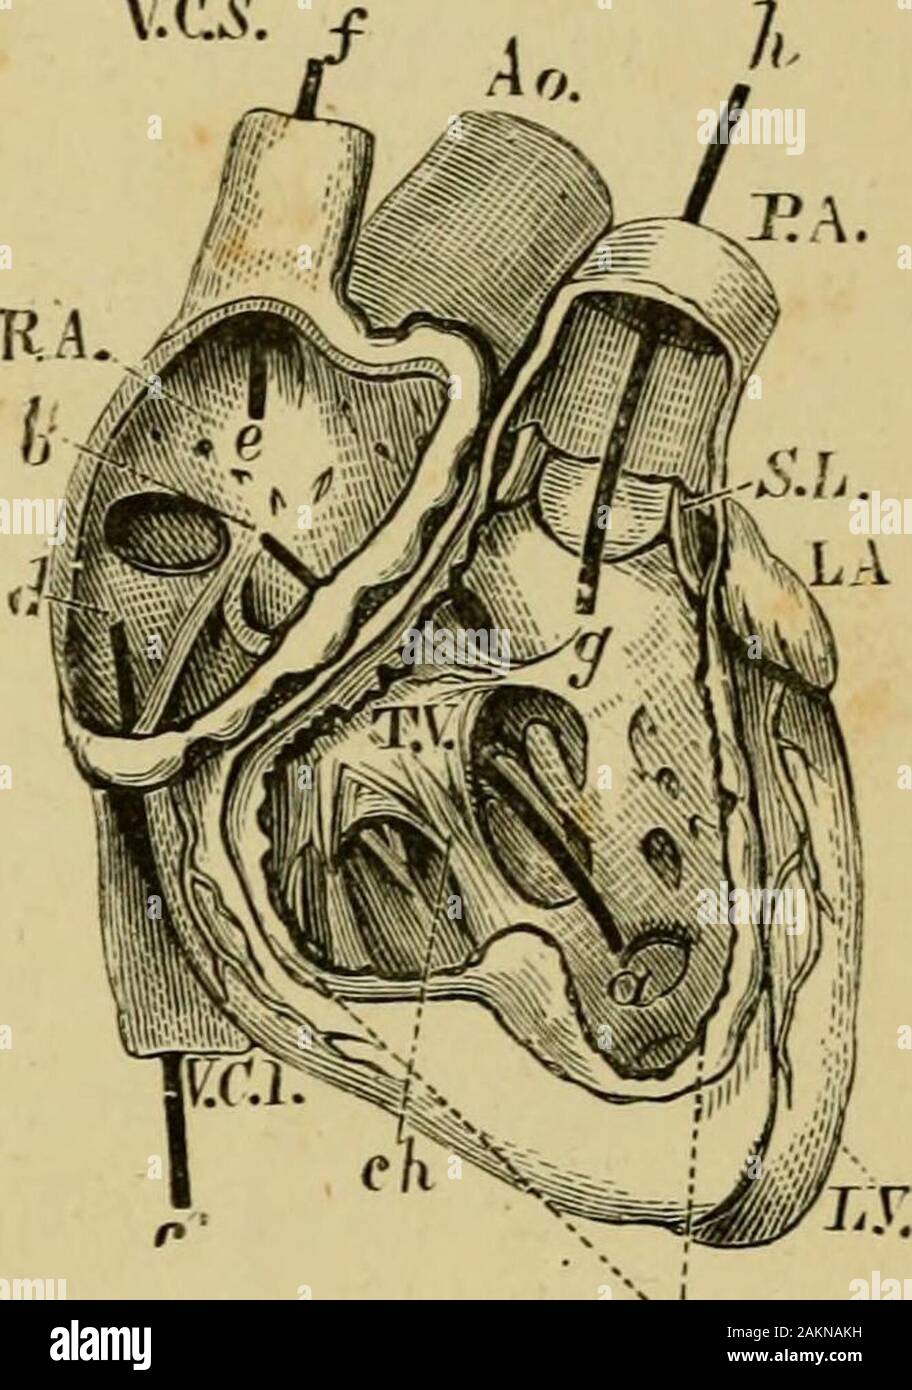 La aorta y la vena cava inferior hi-res stock photography and images ...